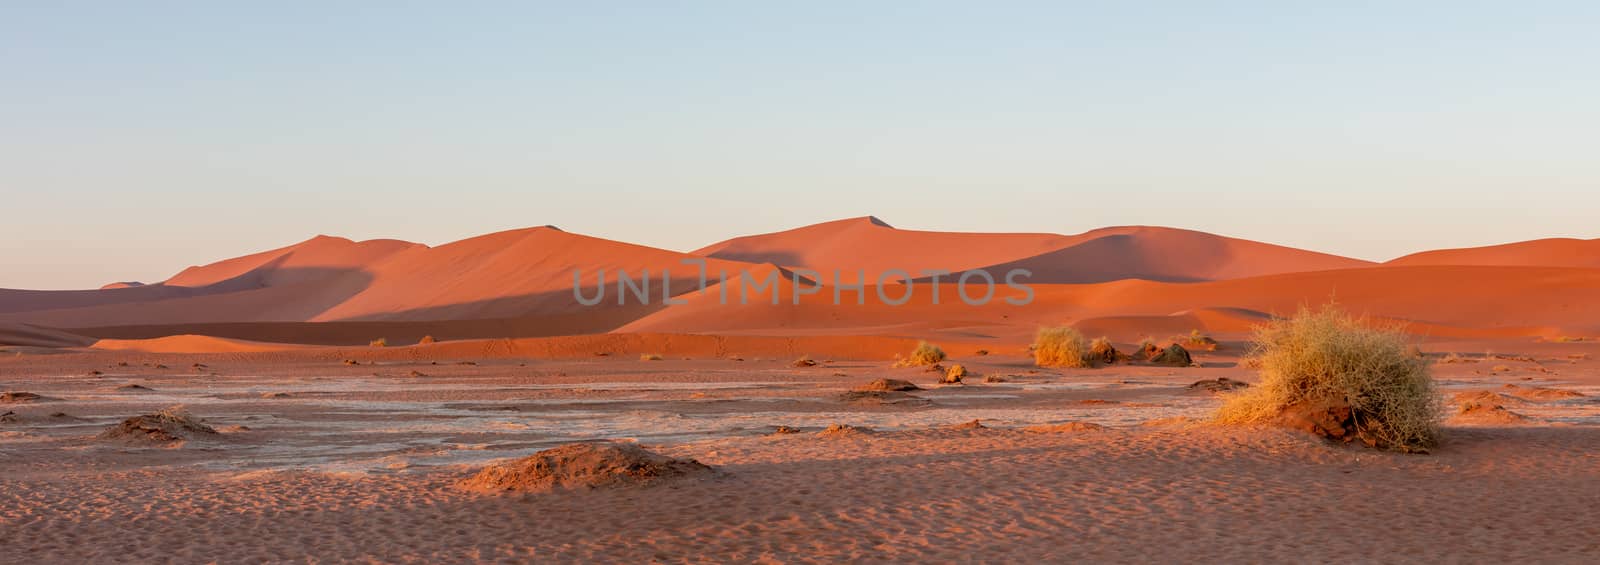 beautiful landscape Hidden Vlei in Namibia Africa by artush